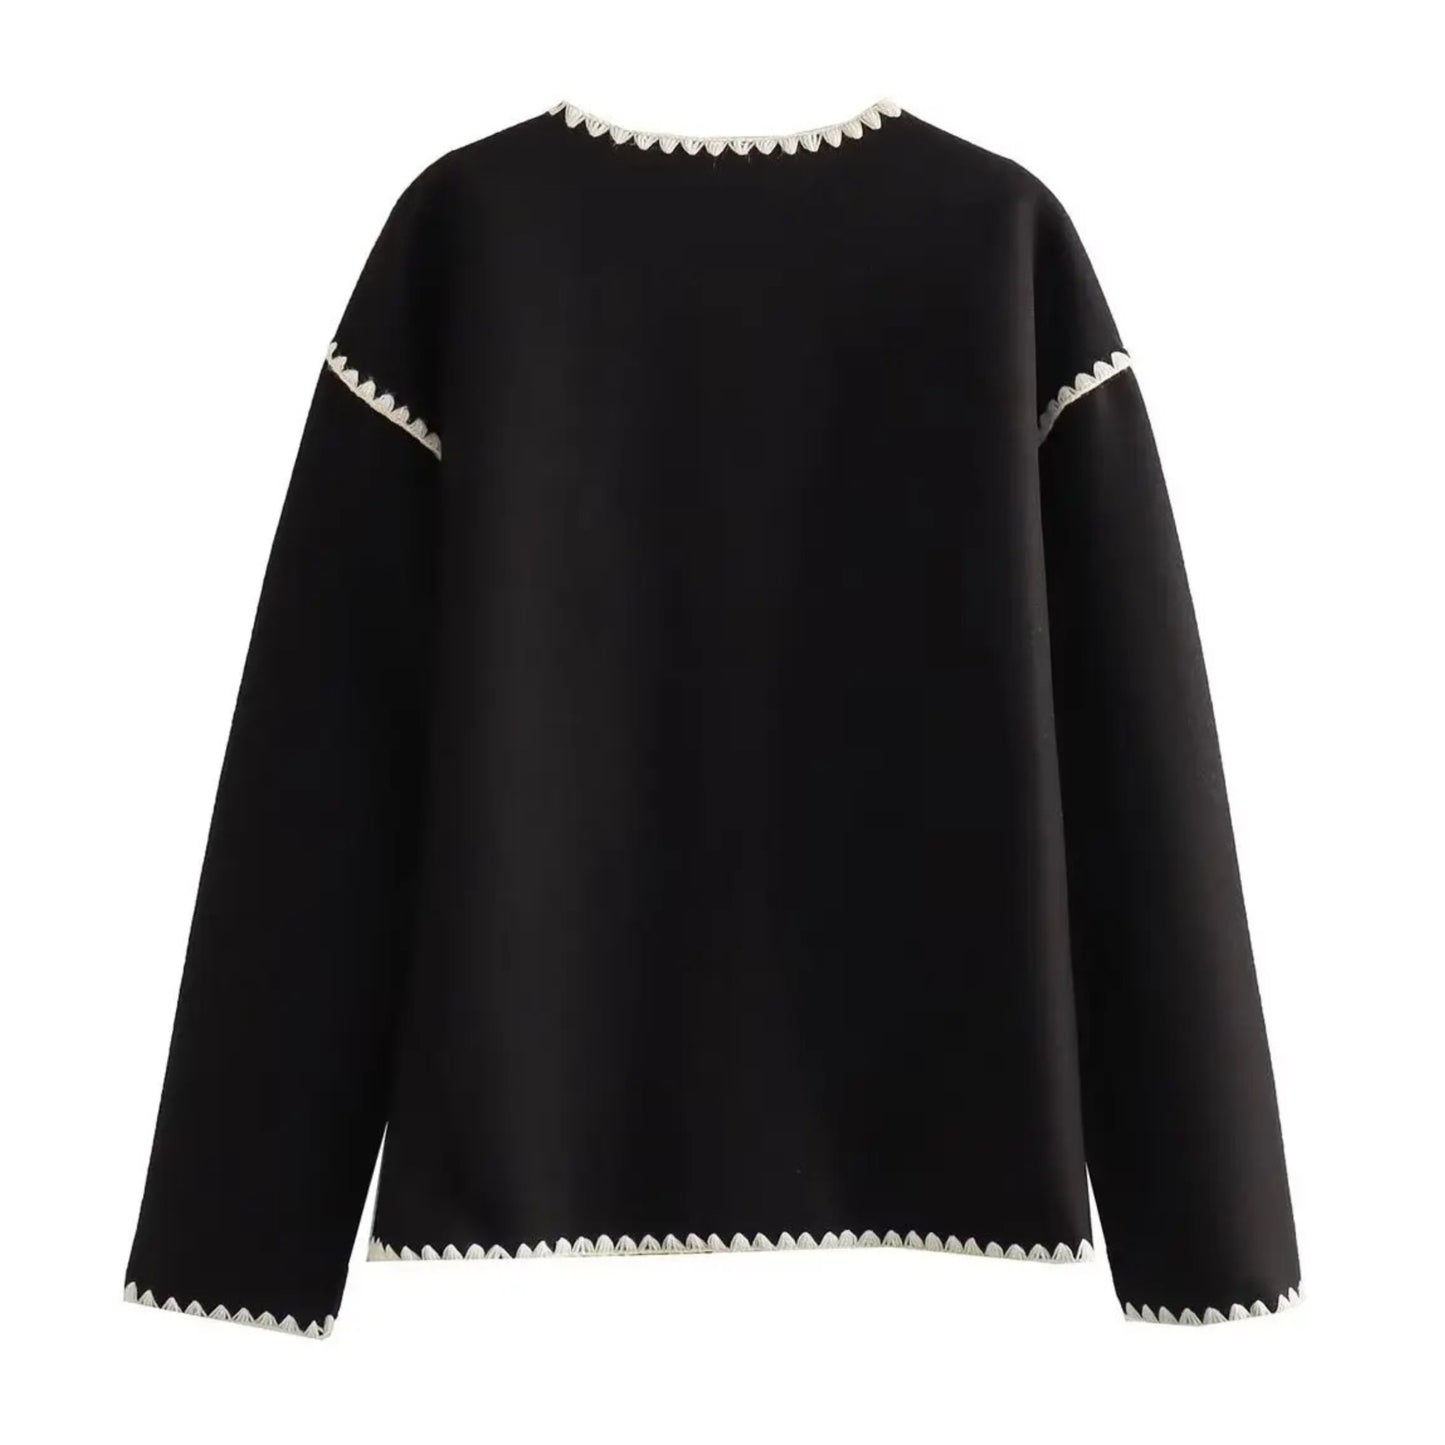 Black & White Trim Knit Cardigan Sweater